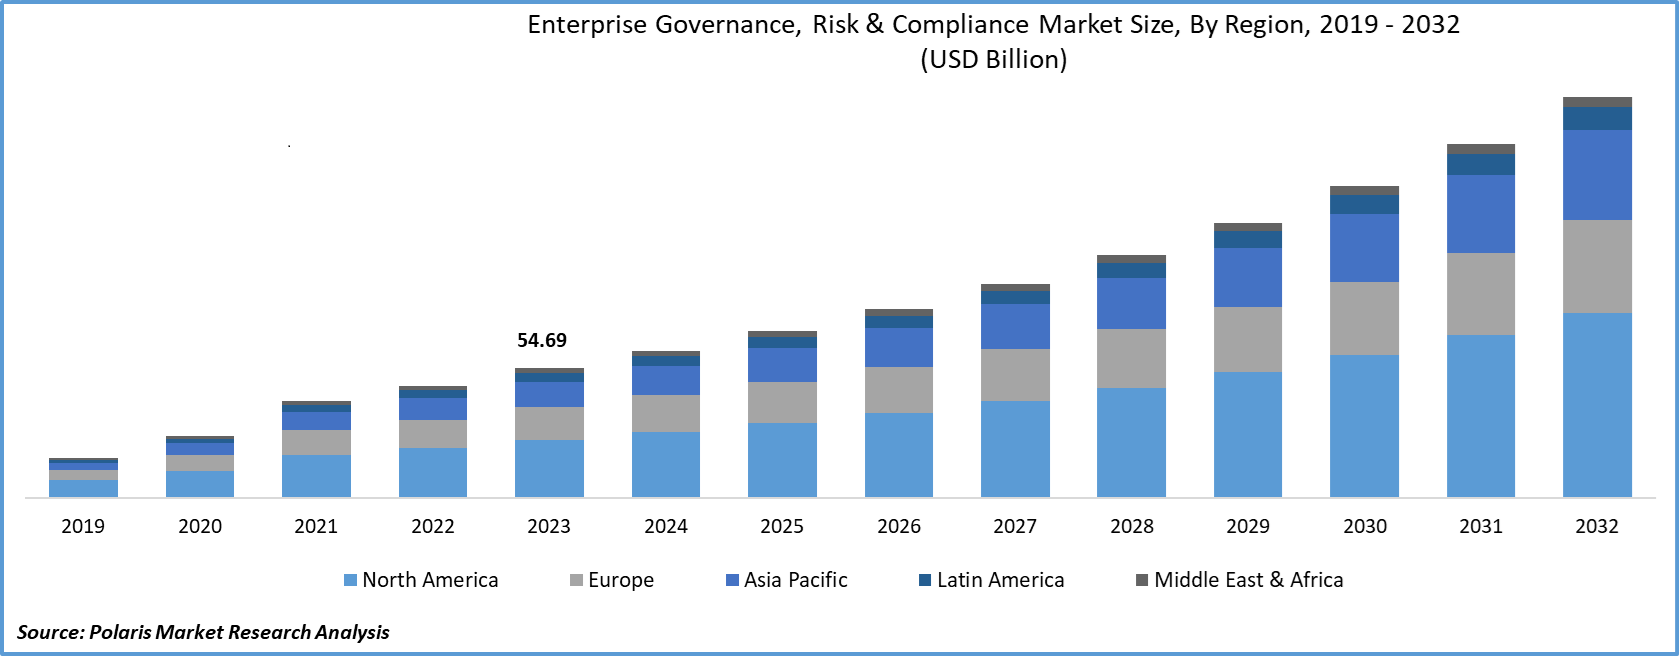 Enterprise Governance, Risk & Compliance Market Size